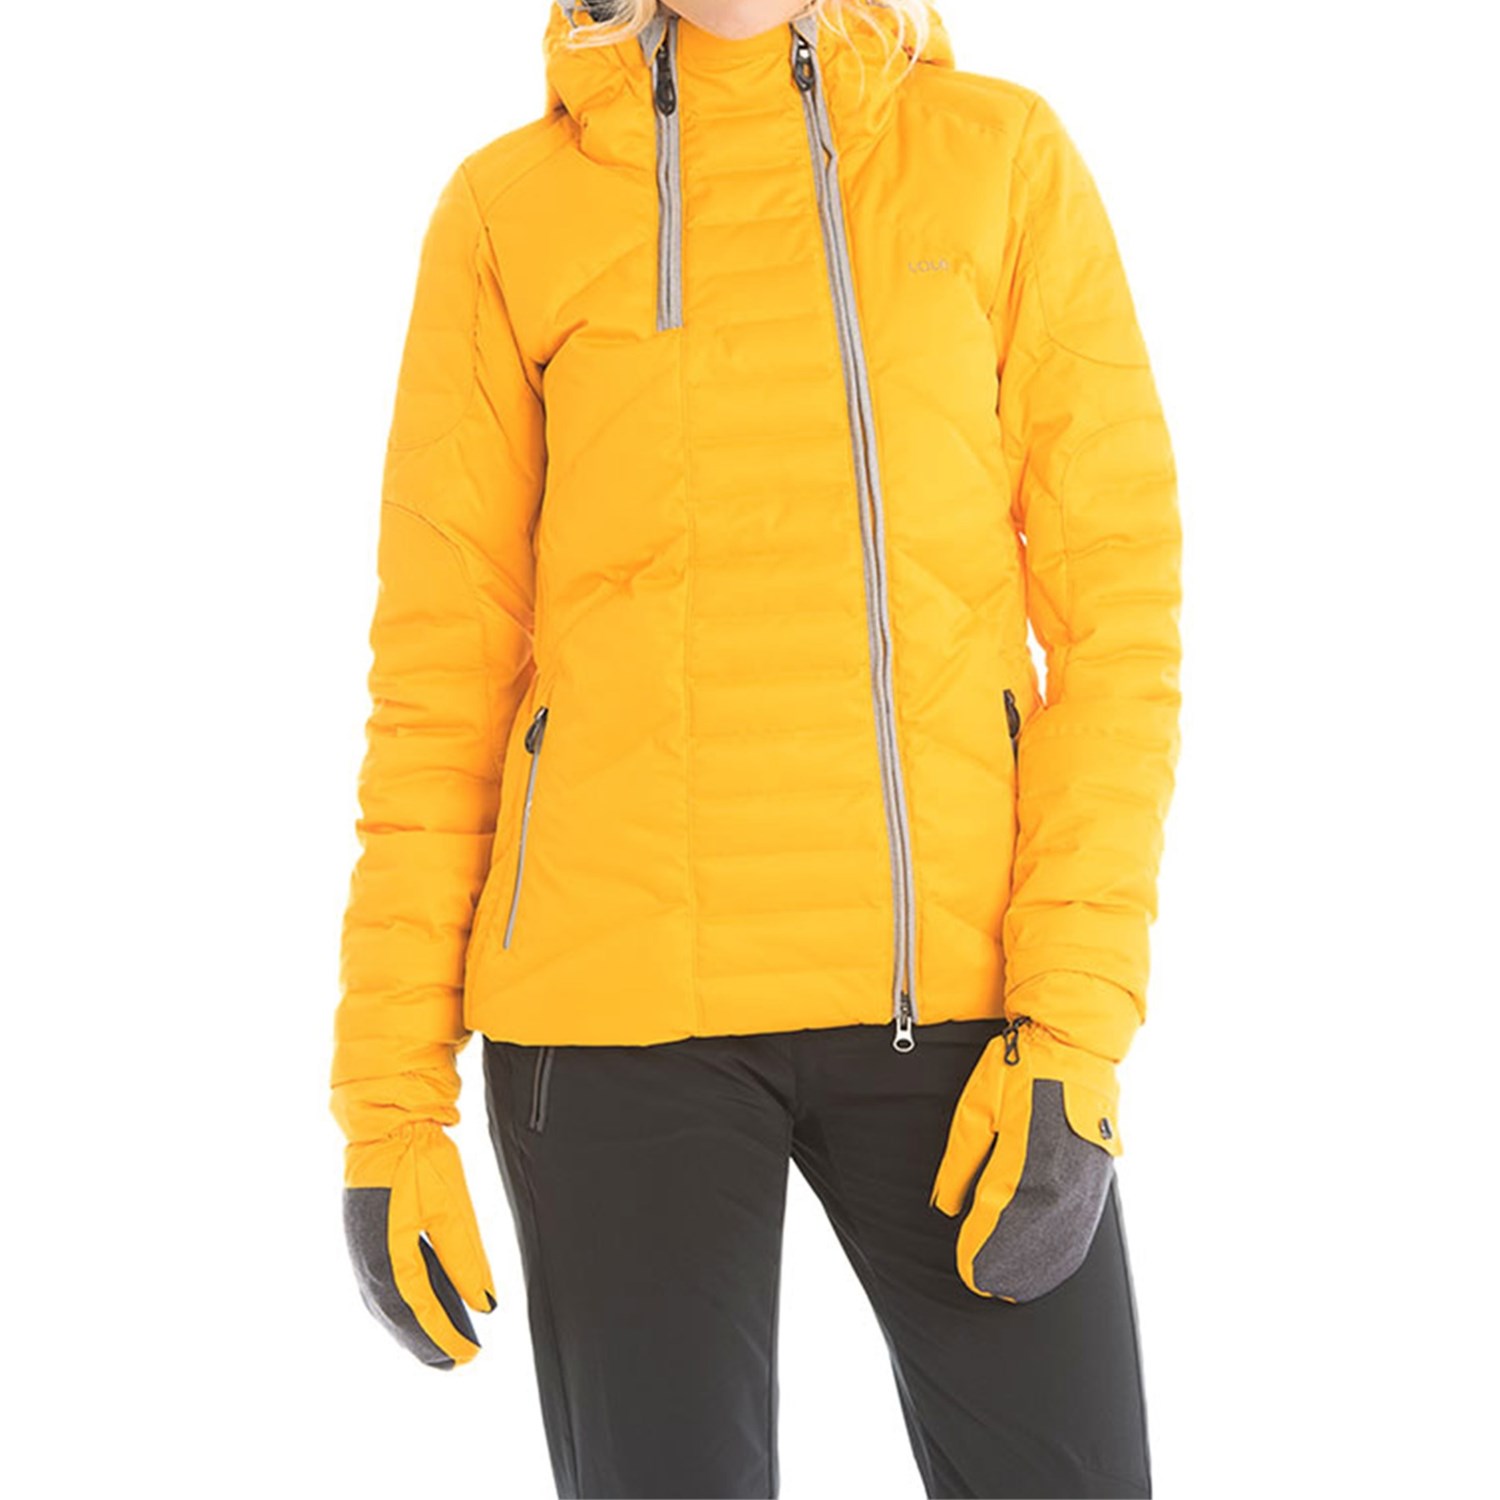 Lole Alta Downglow Down Ski Jacket (For Women) - Save 60%